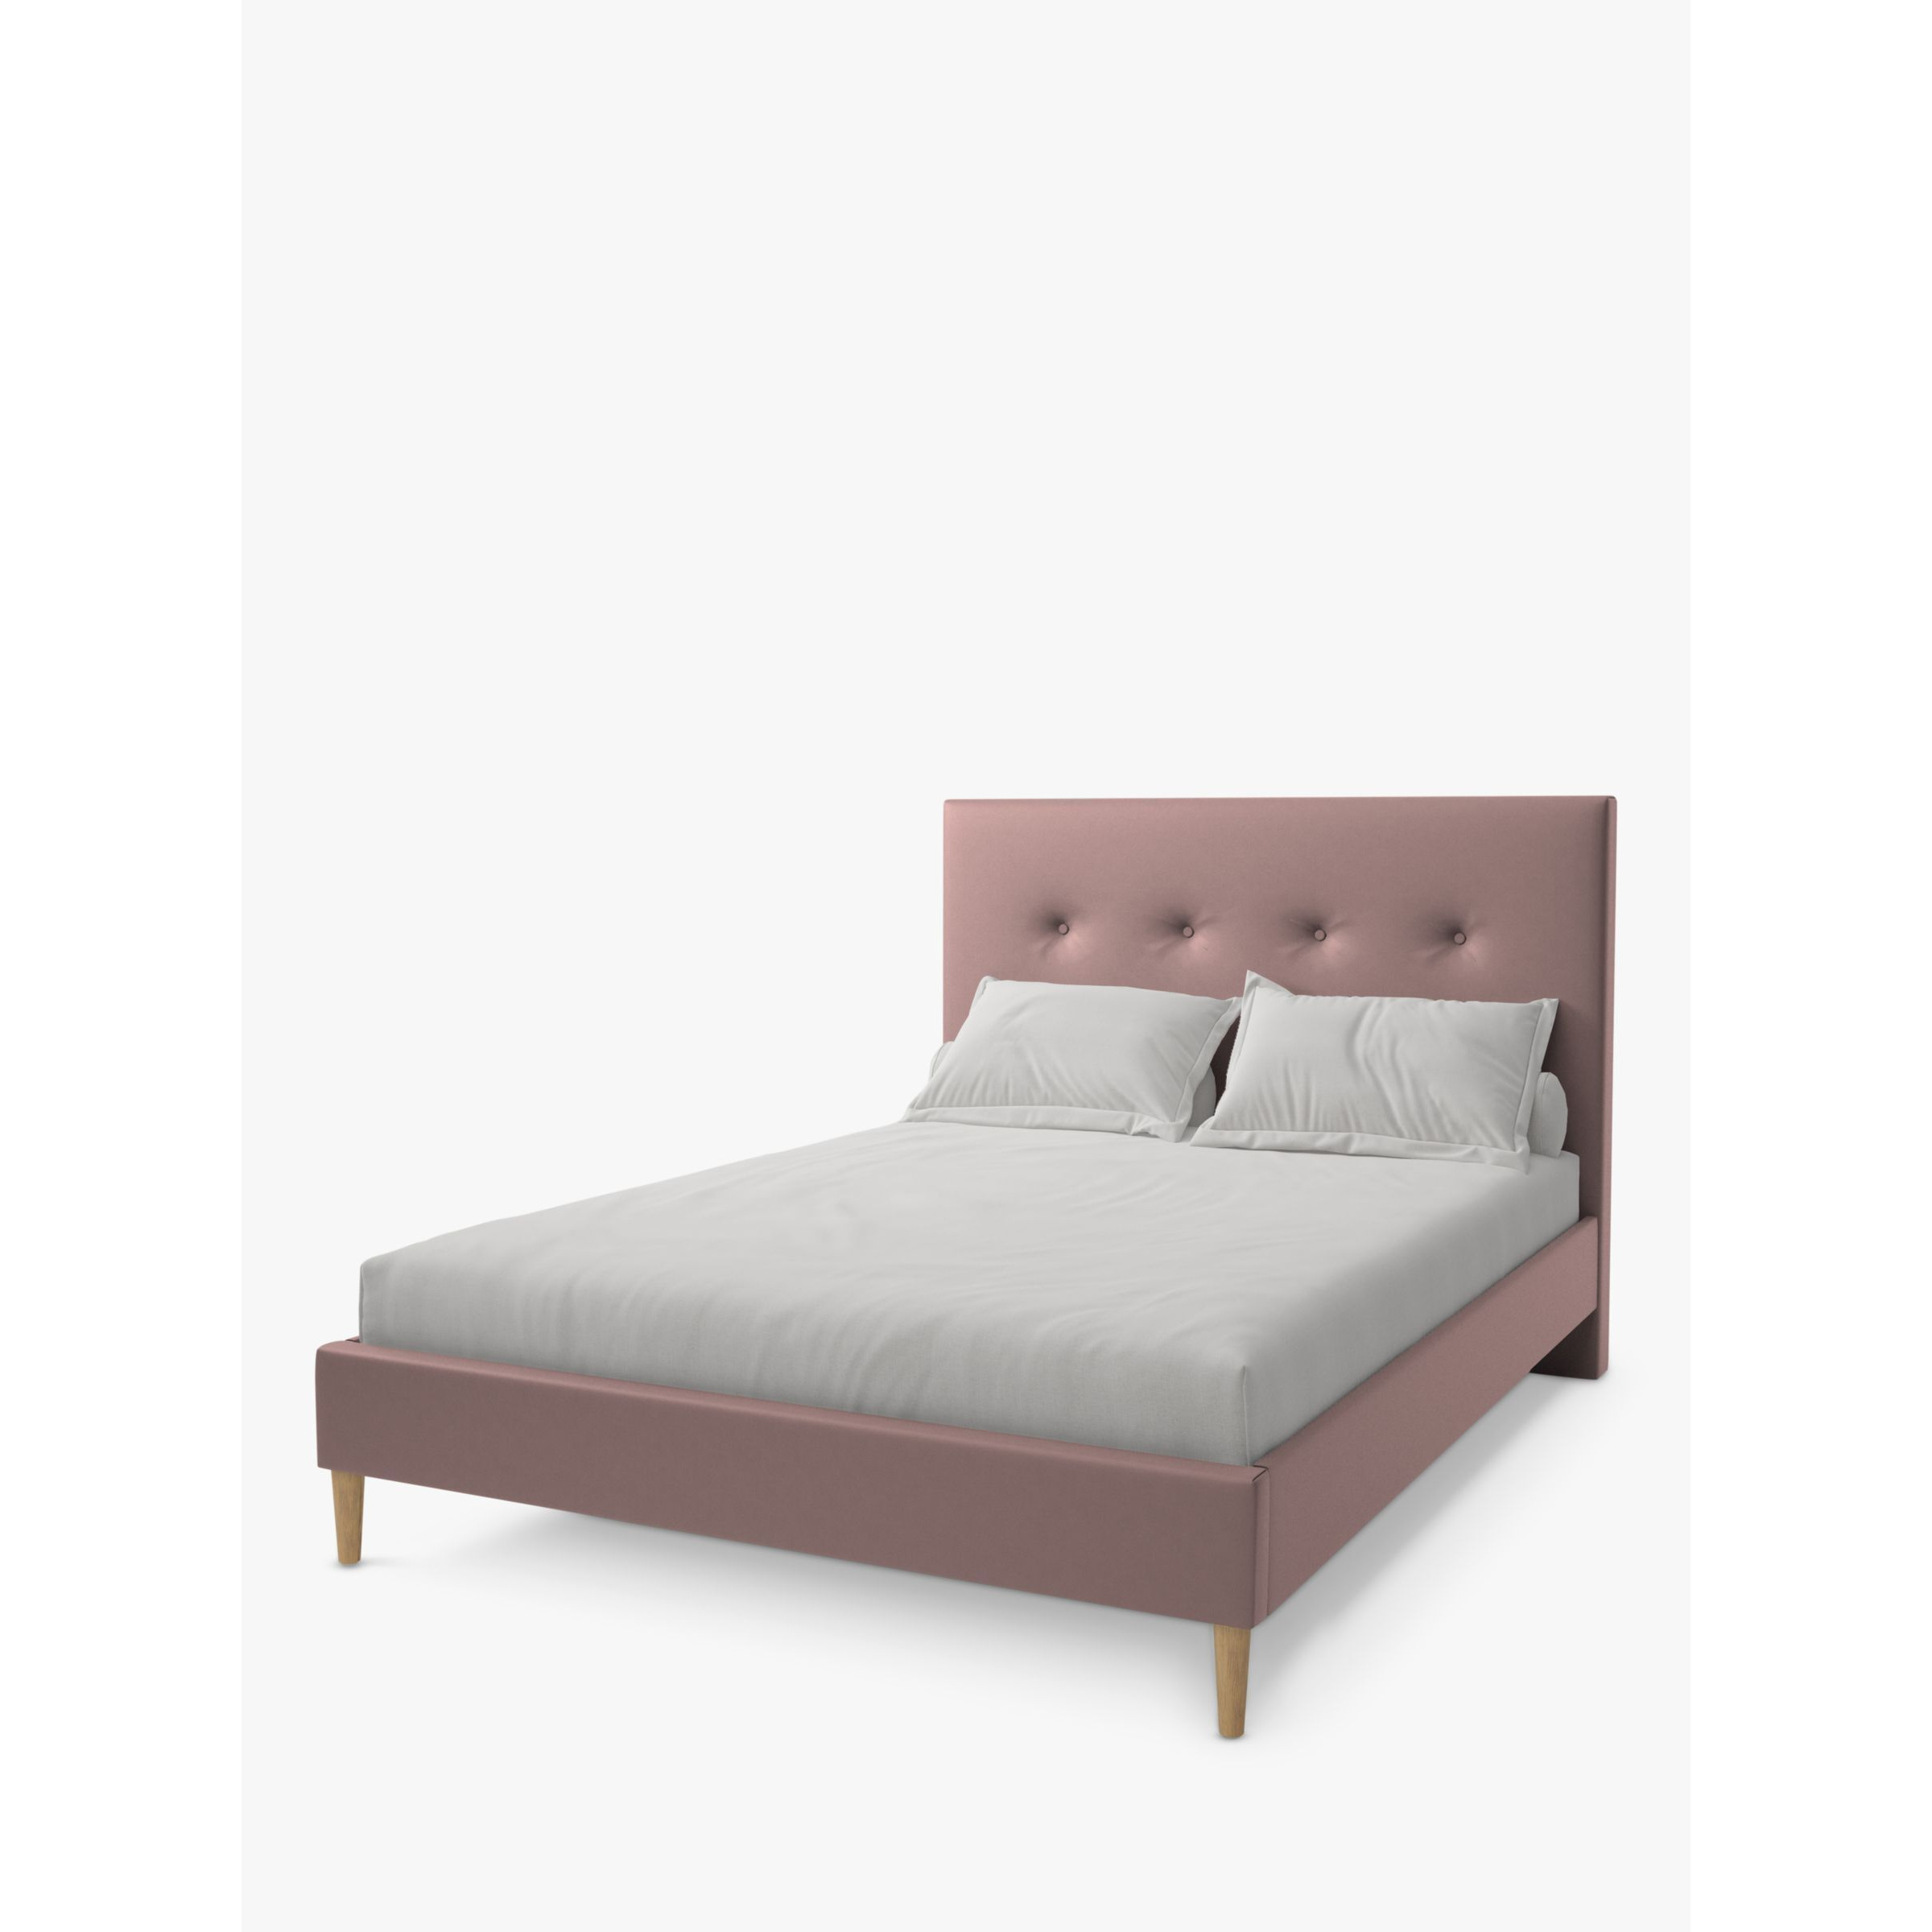 Koti Home Arun Upholstered Bed Frame, Super King Size